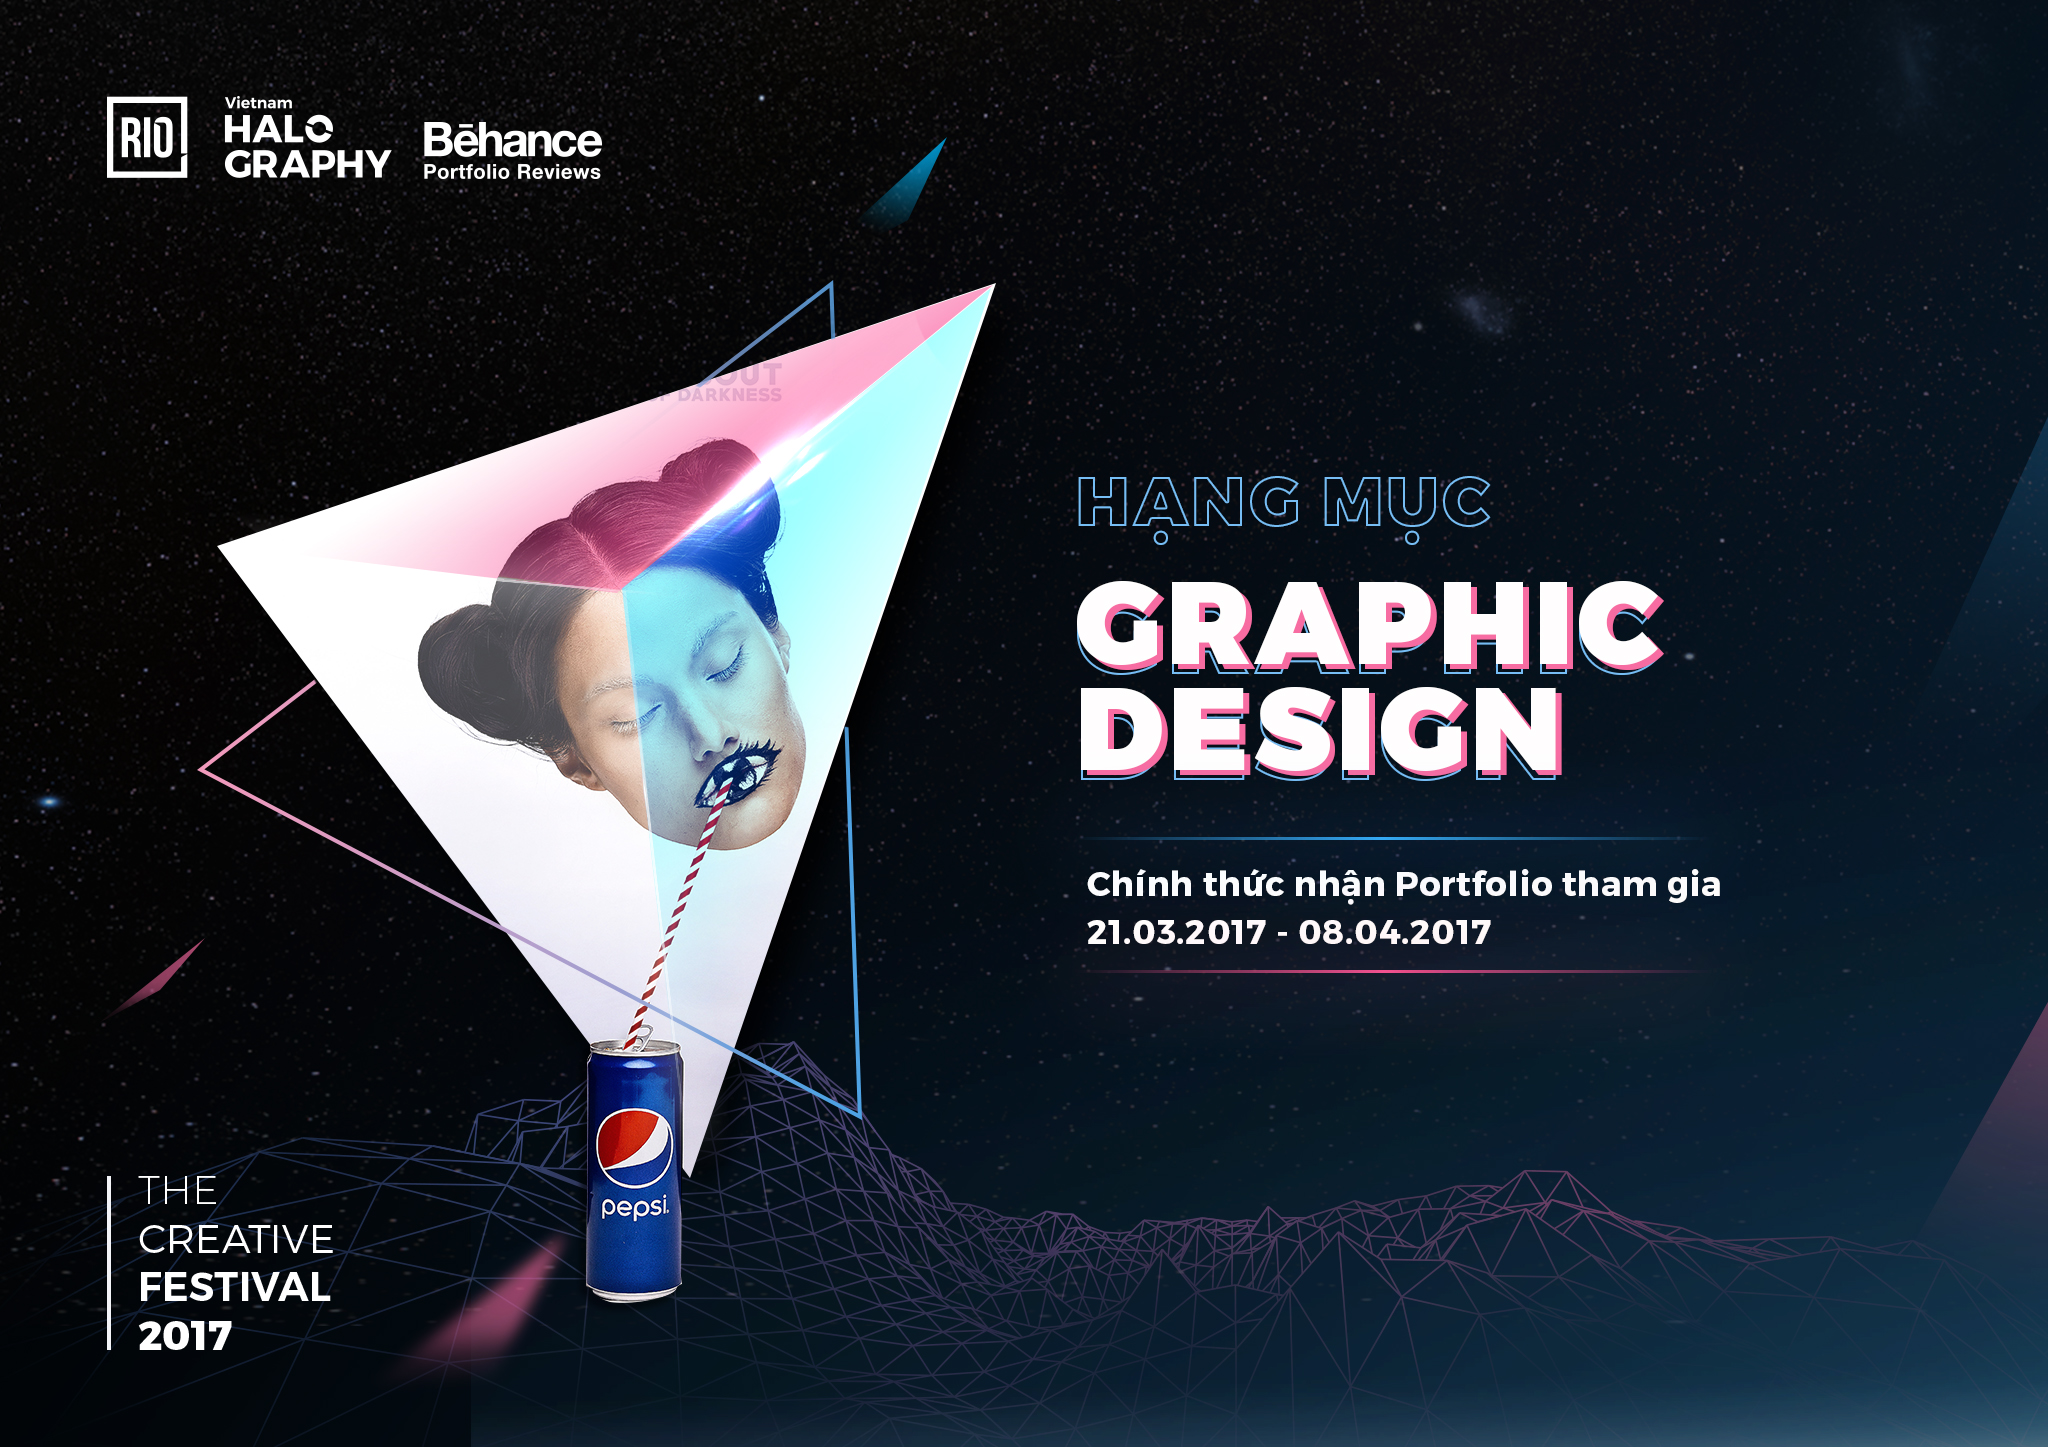 Halo_graphic design (1)